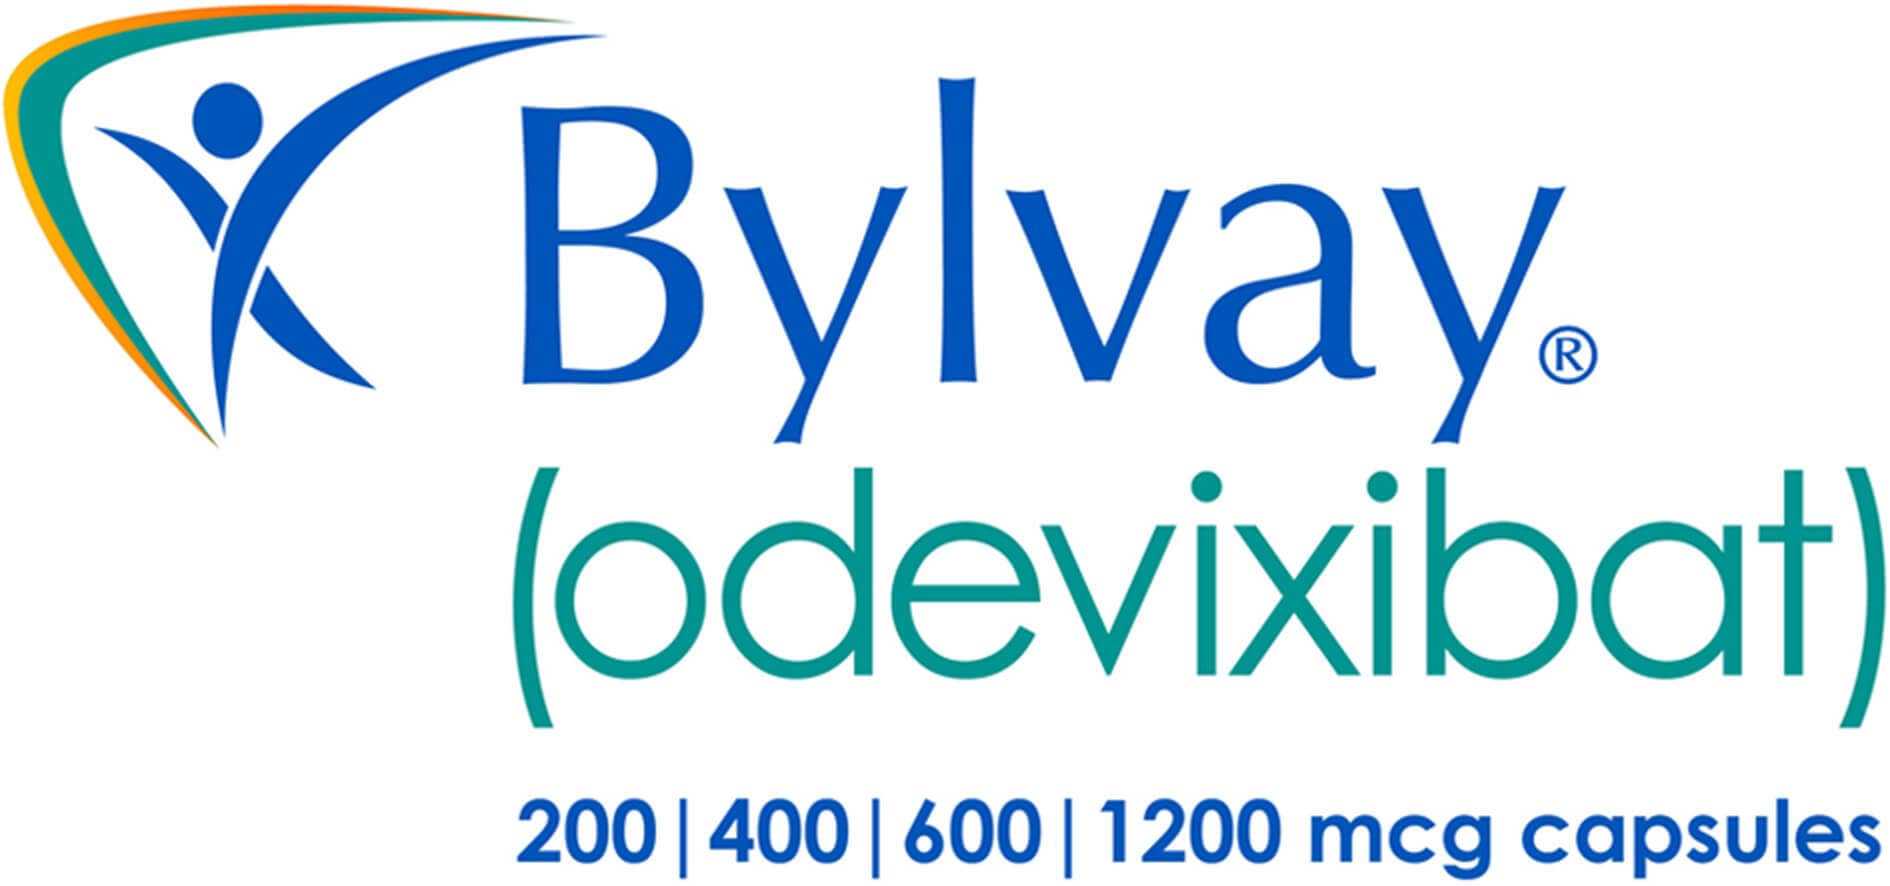 Bylvay (odevixibat) 200, 400, 600, 1200 mcg capsules logo